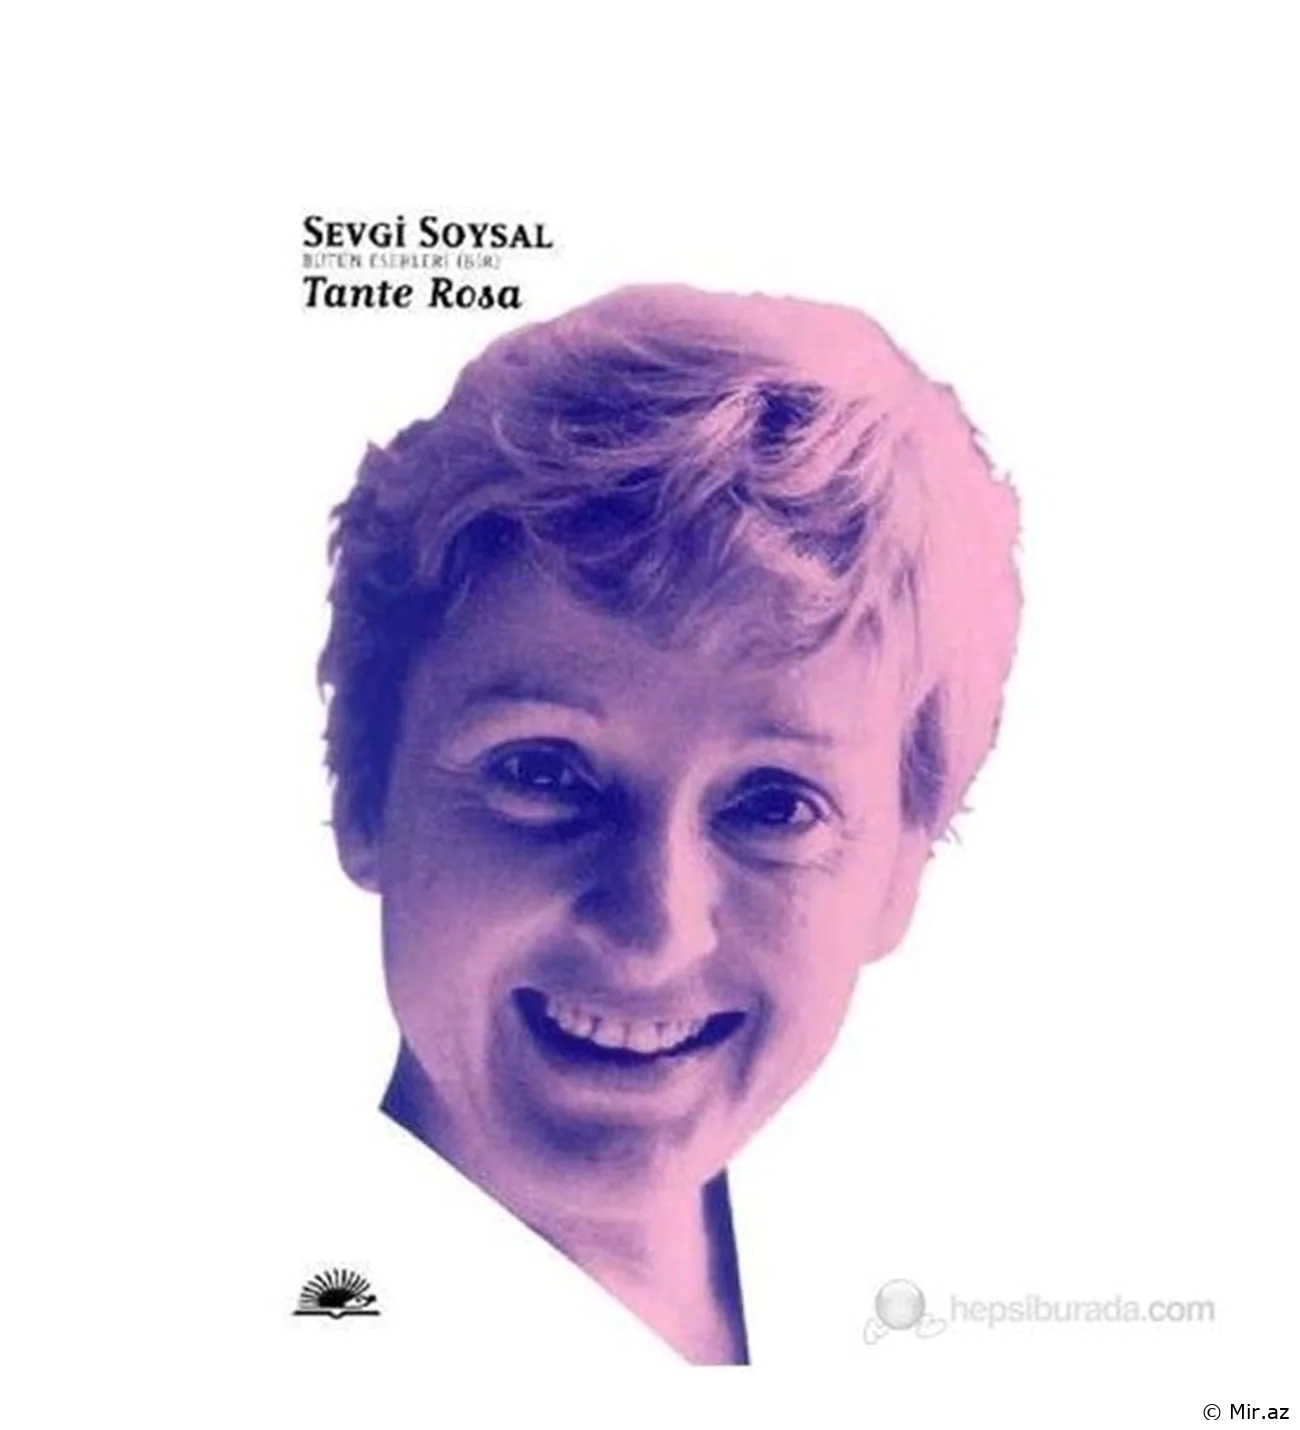 Sevgi Soysal "Tante Rosa" PDF